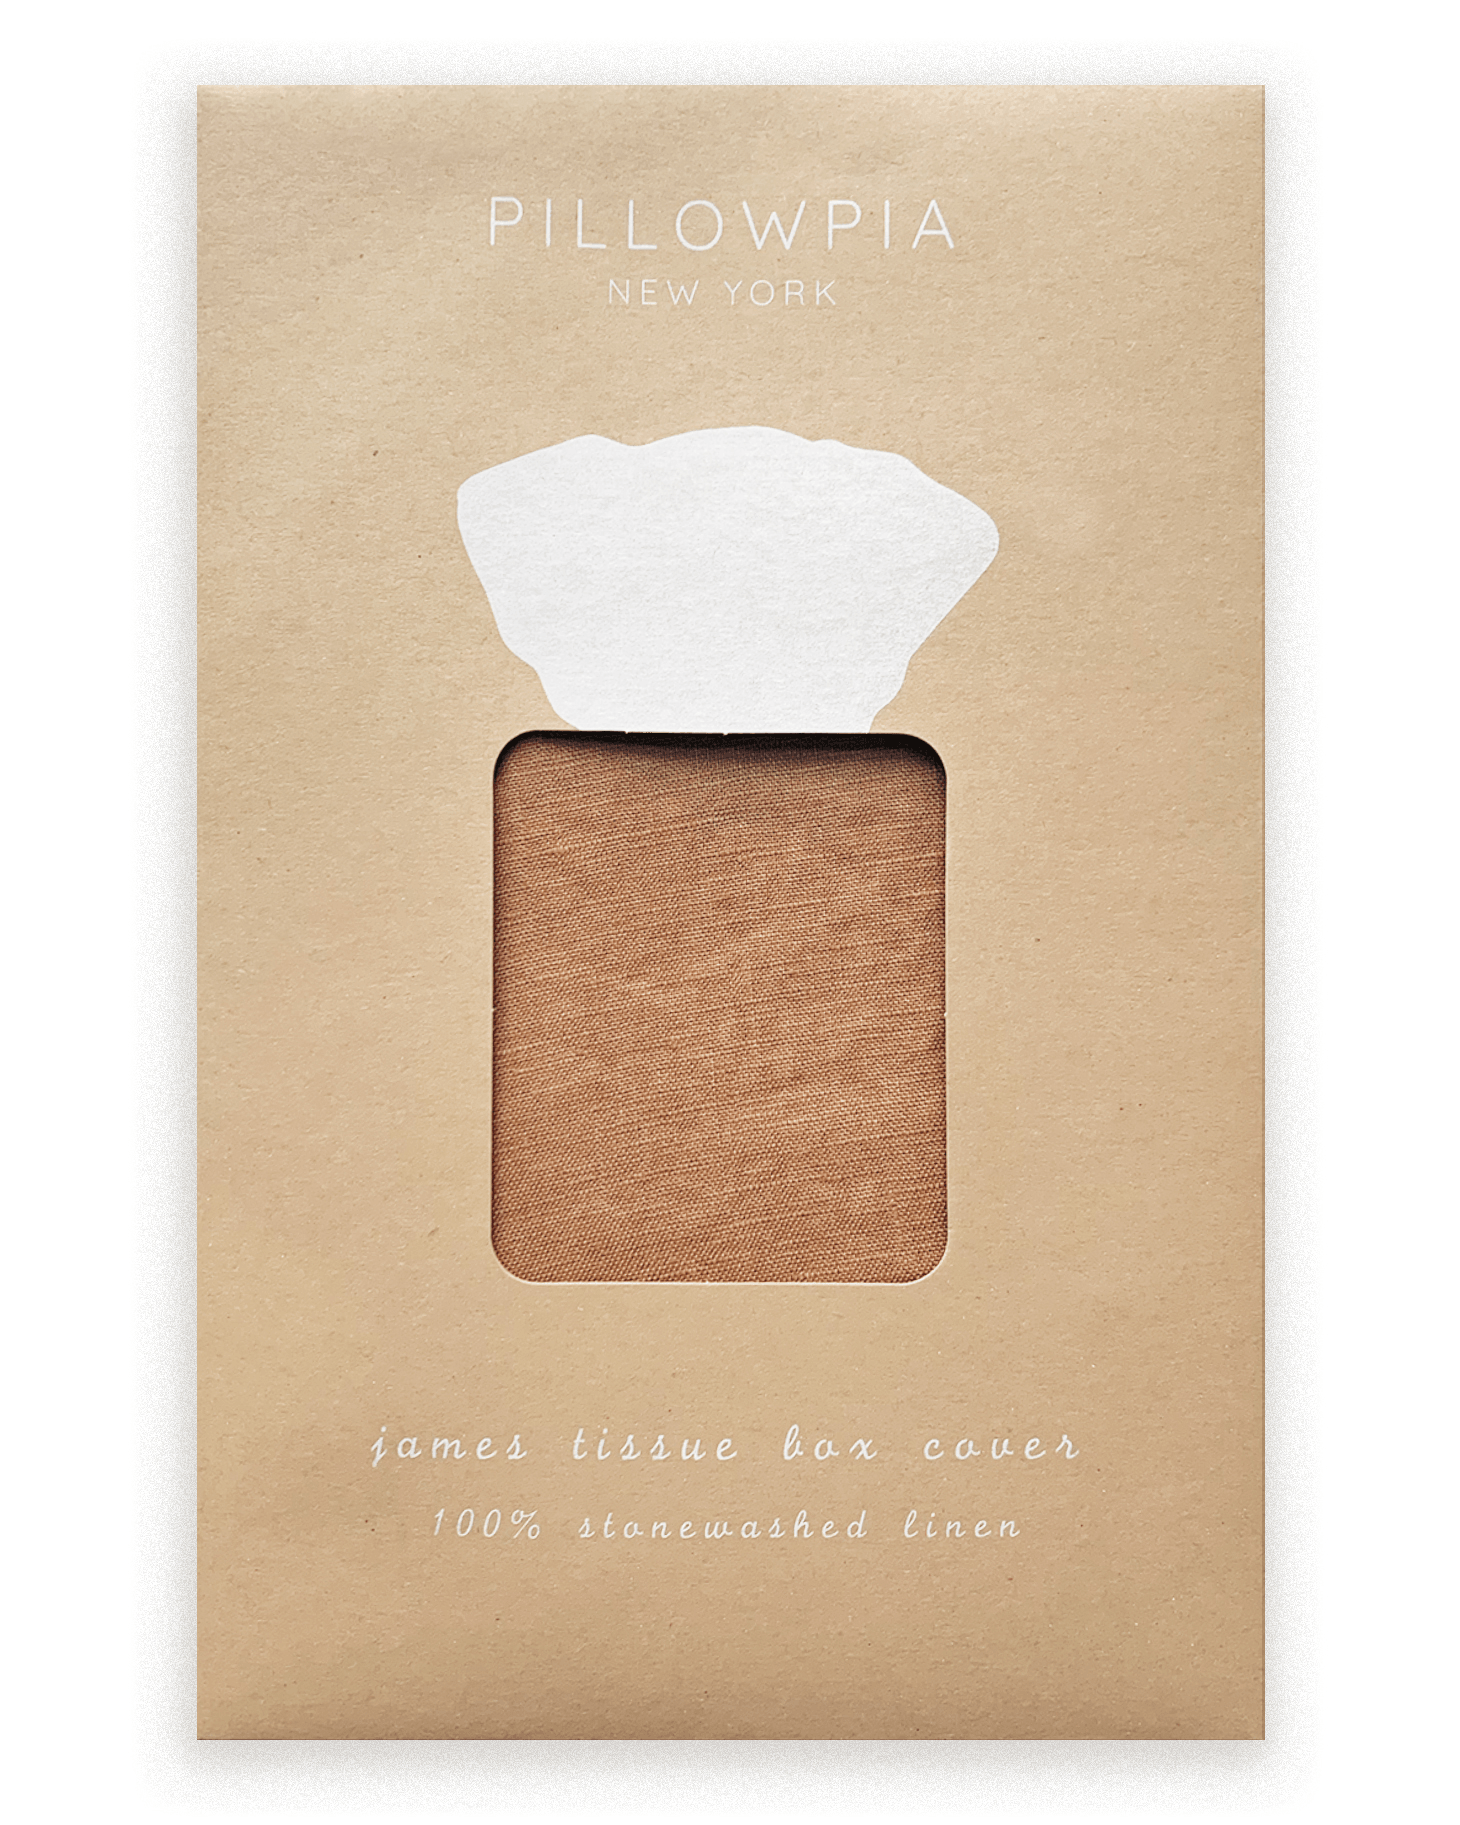 PILLOWPIA james tissue box cover